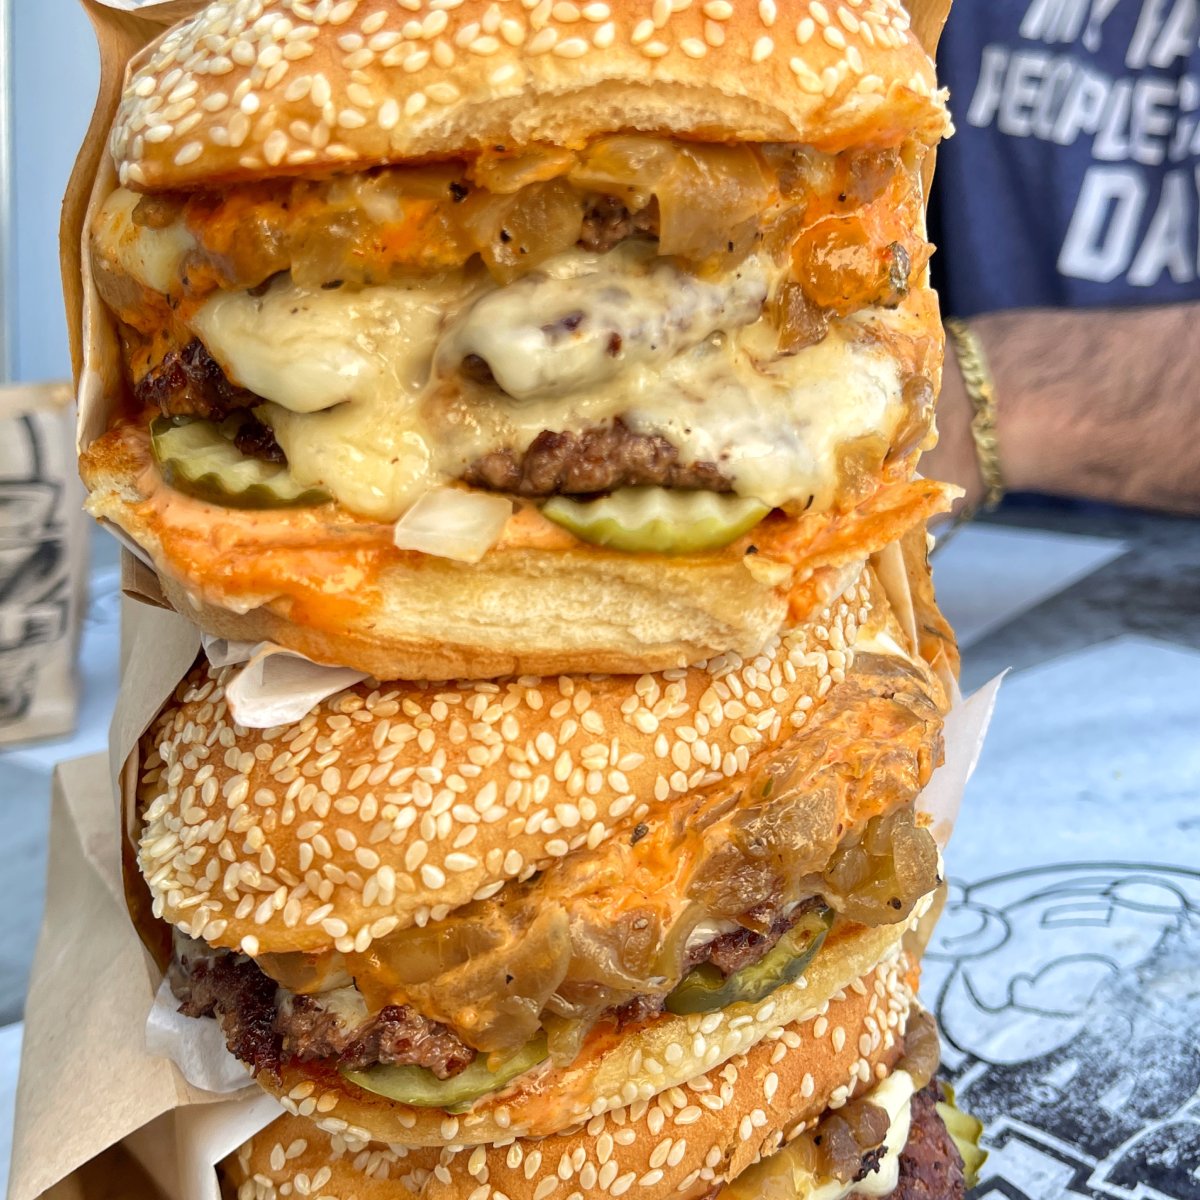 Big Belly Burgers photo